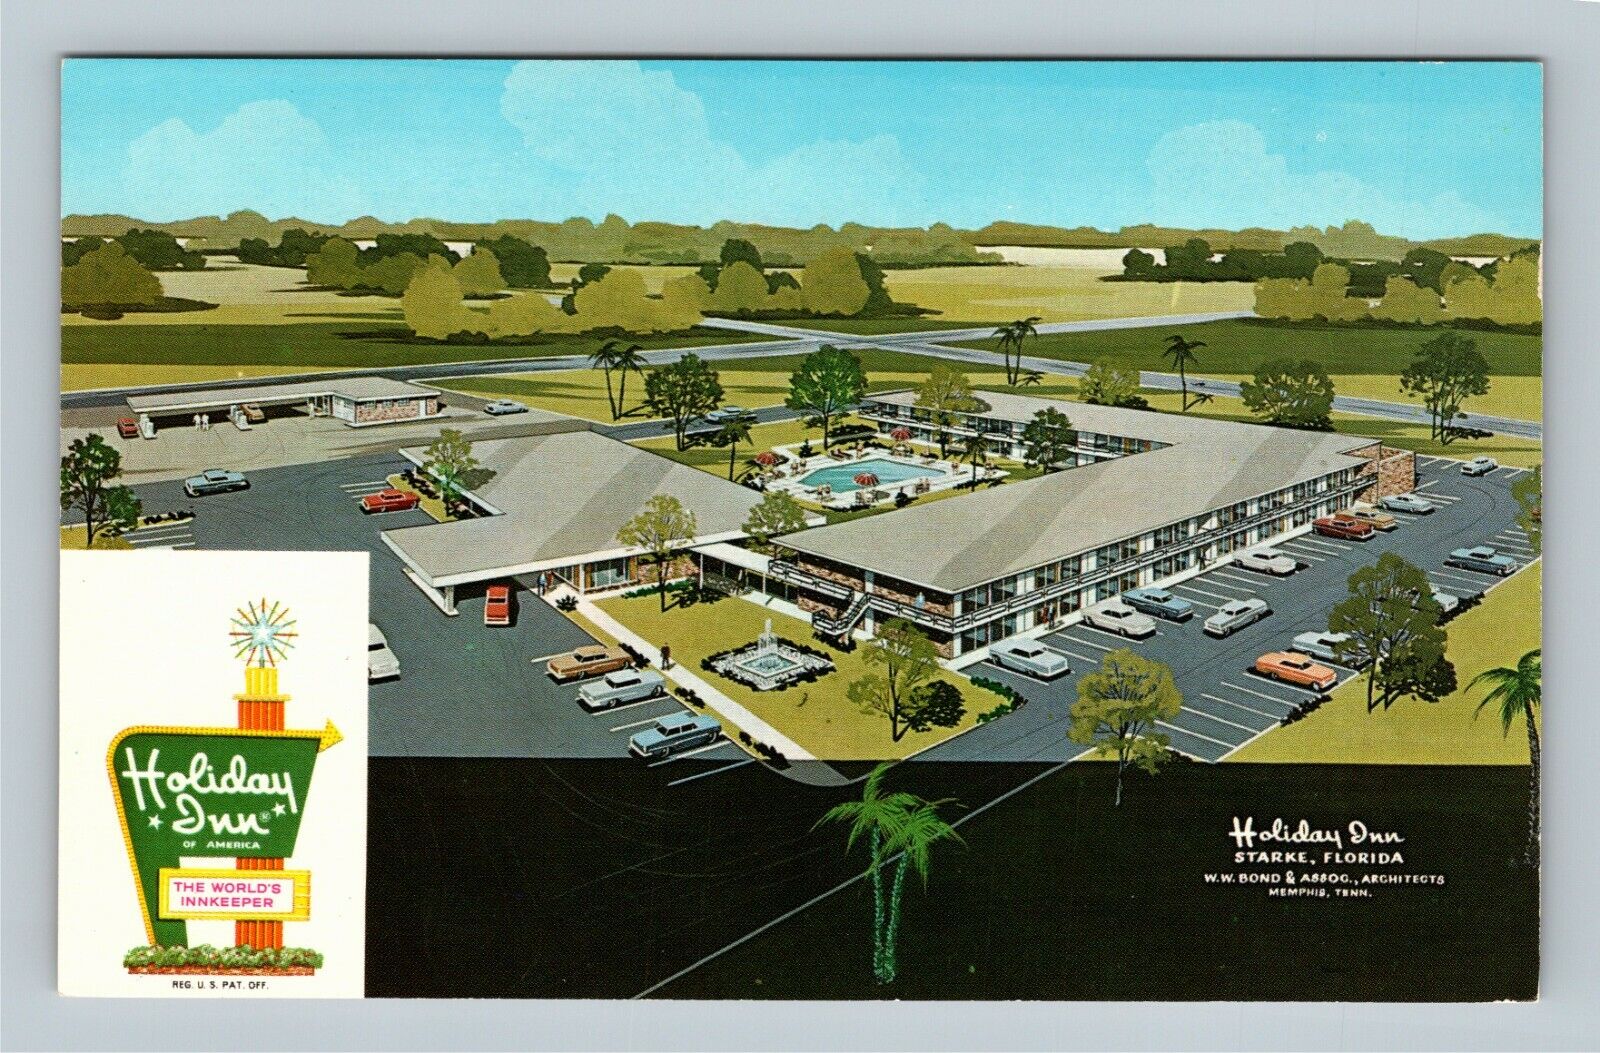 Starke FL, Holiday Inn Advertising, Florida Vintage Postcard